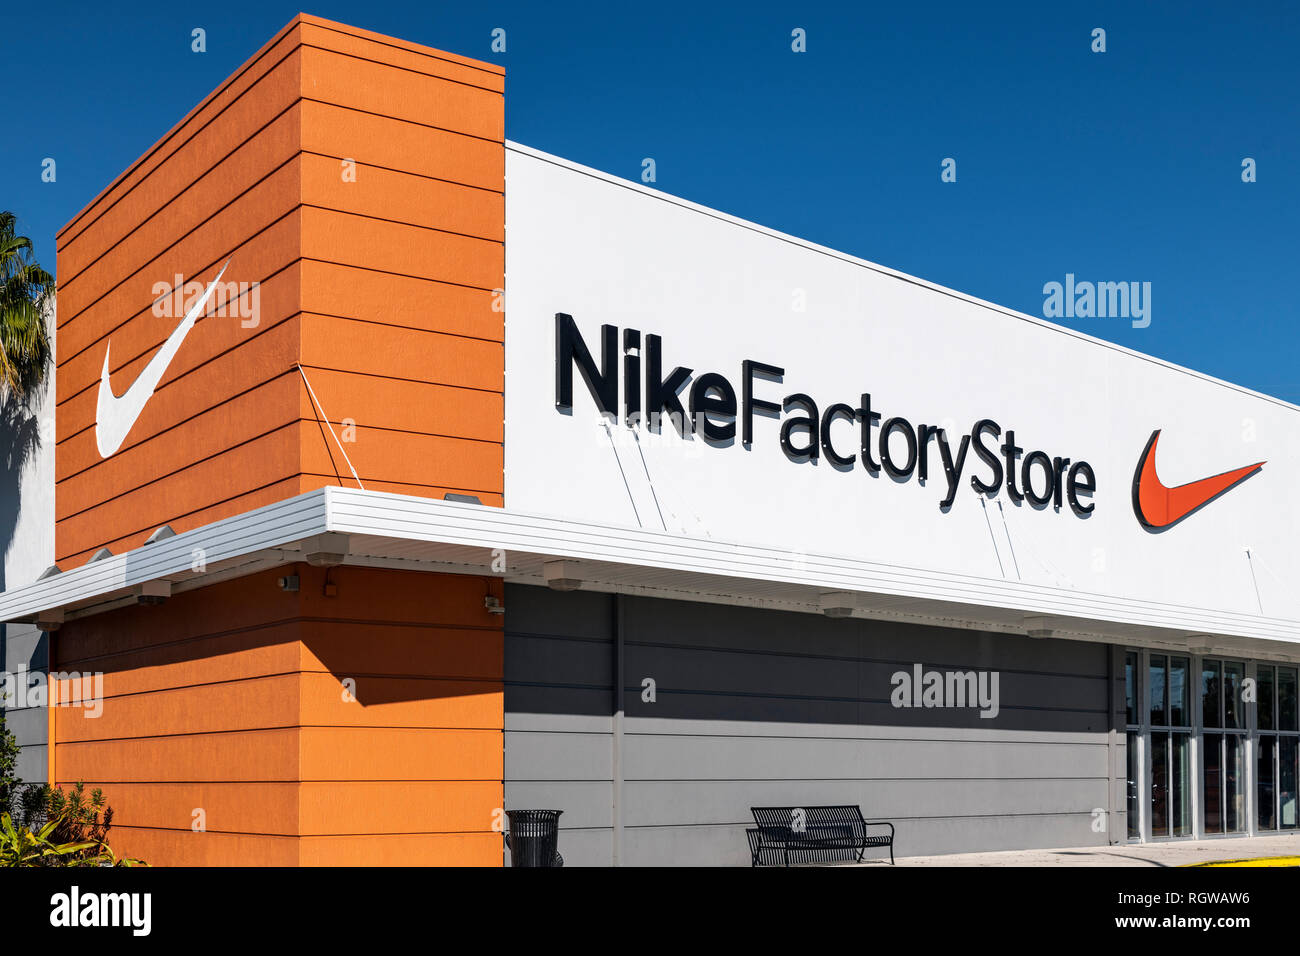 Nike Factory Store Outlet, Kissimmee, Florida, USA Stockfotografie - Alamy